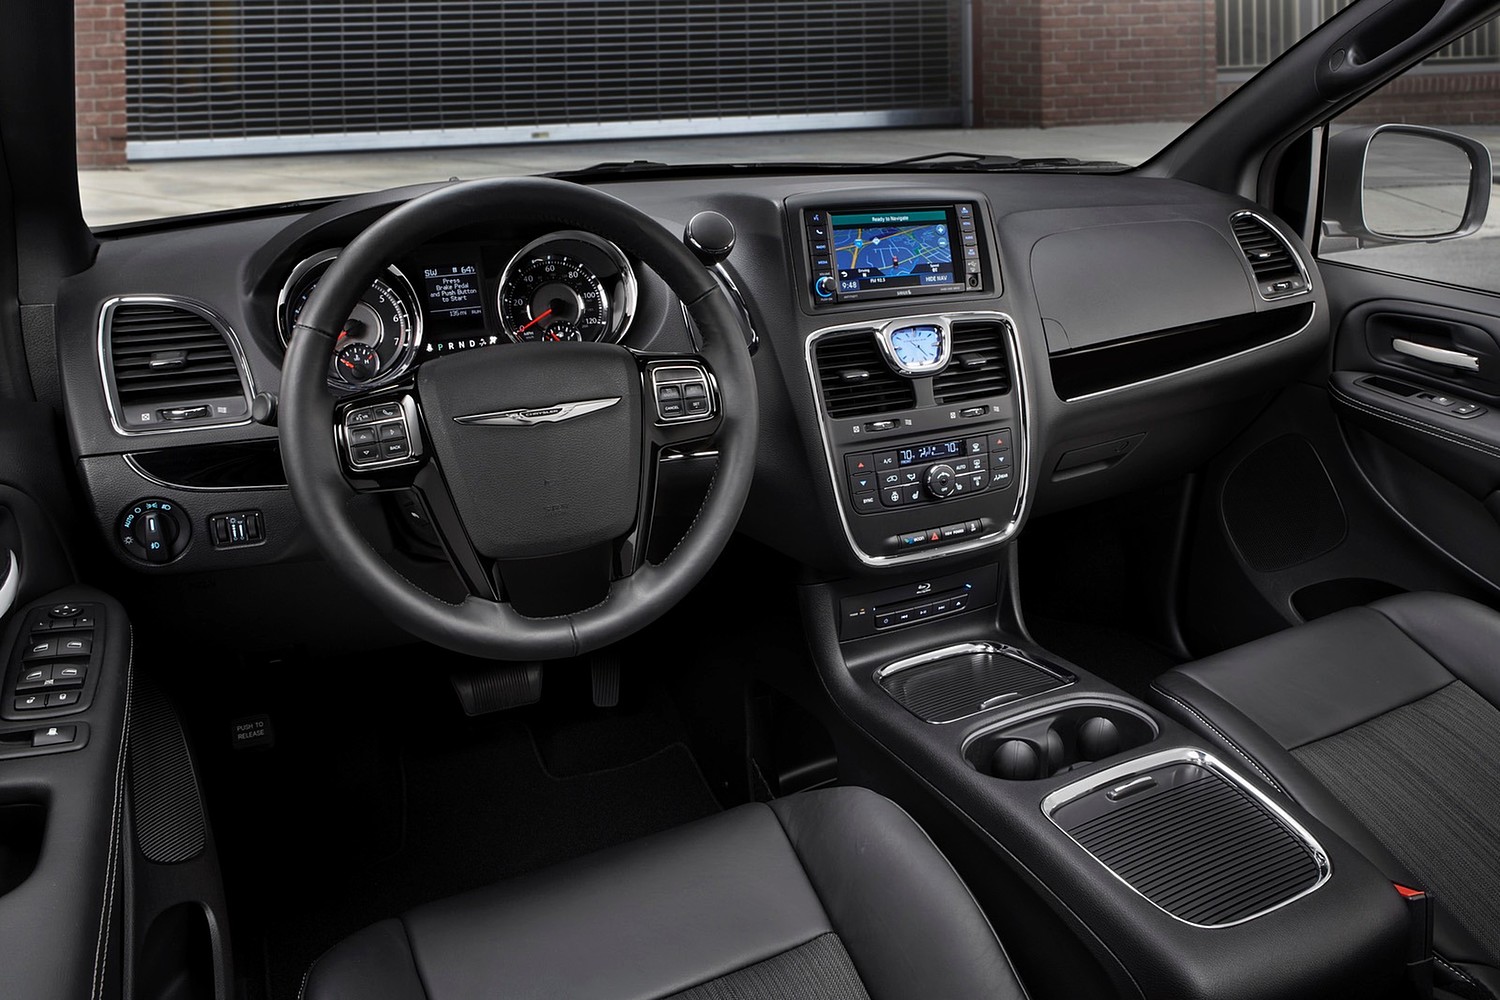 2016 Chrysler Town and Country S Passenger Minivan Interior